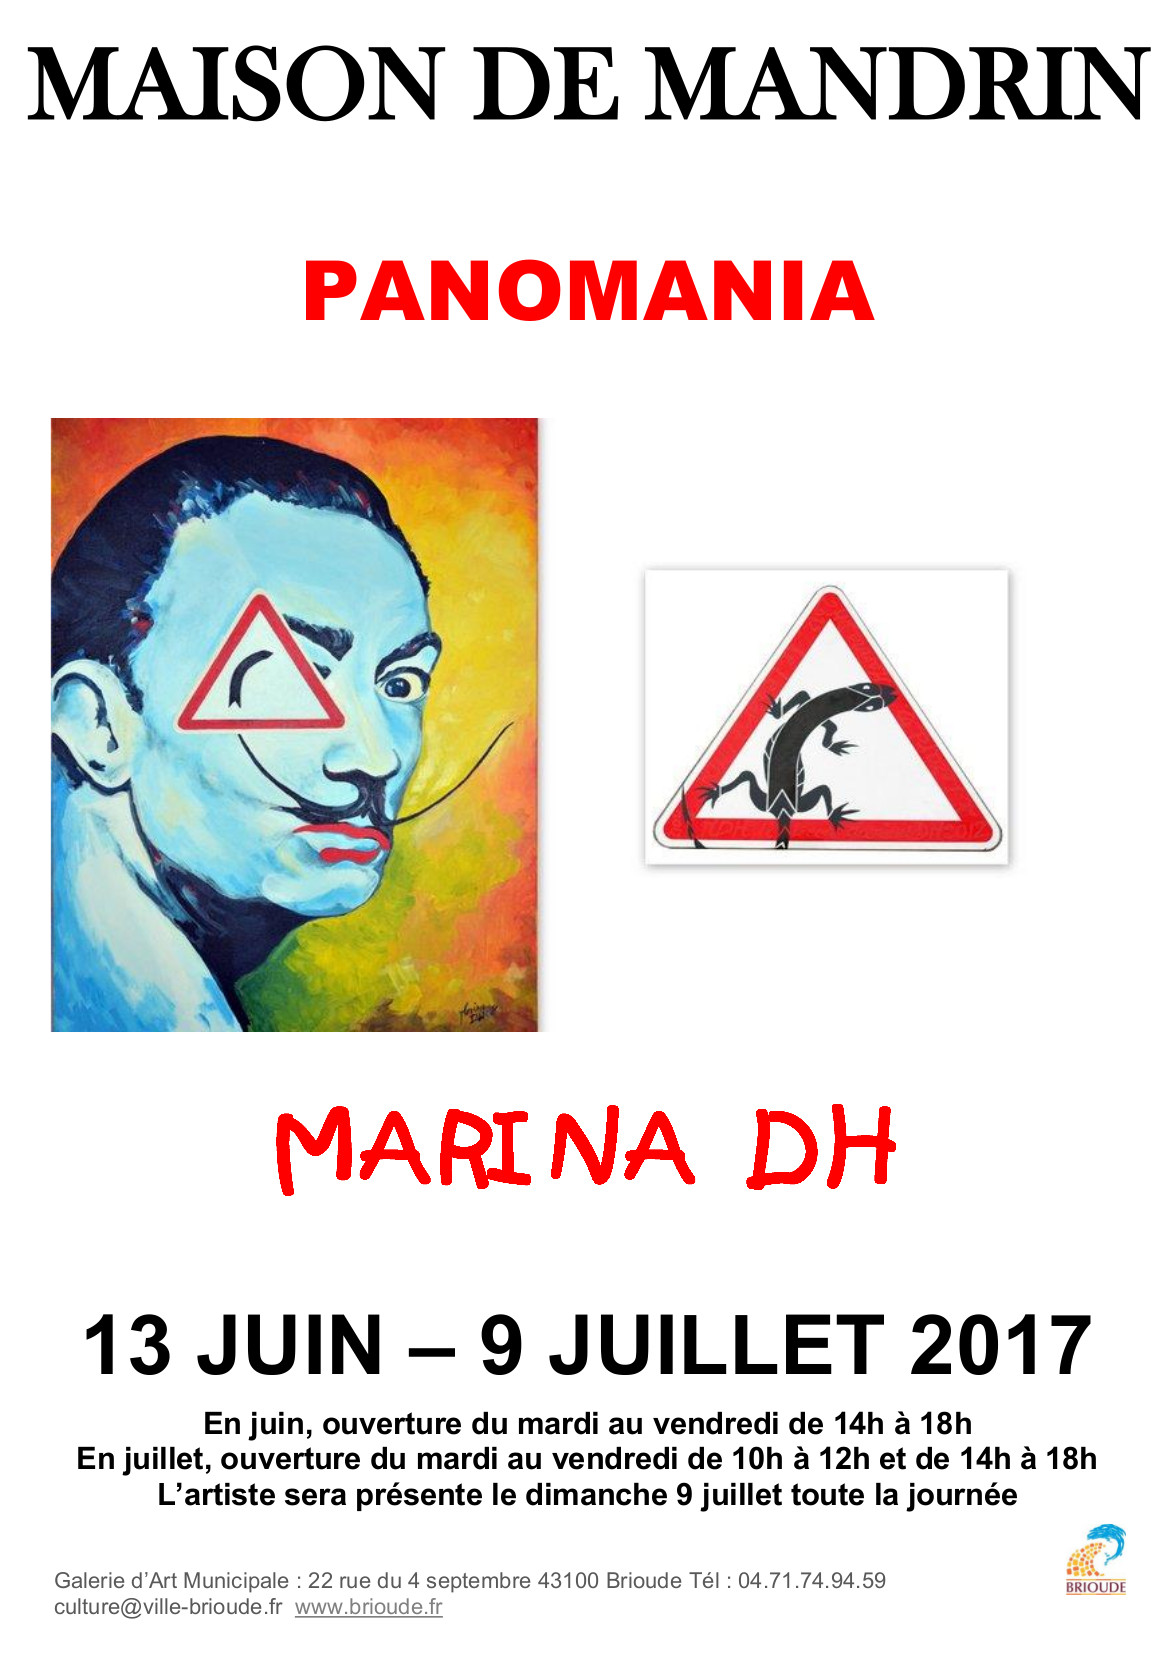 EXPOSITION MAISON DE MANDRIN : PANOMANIA